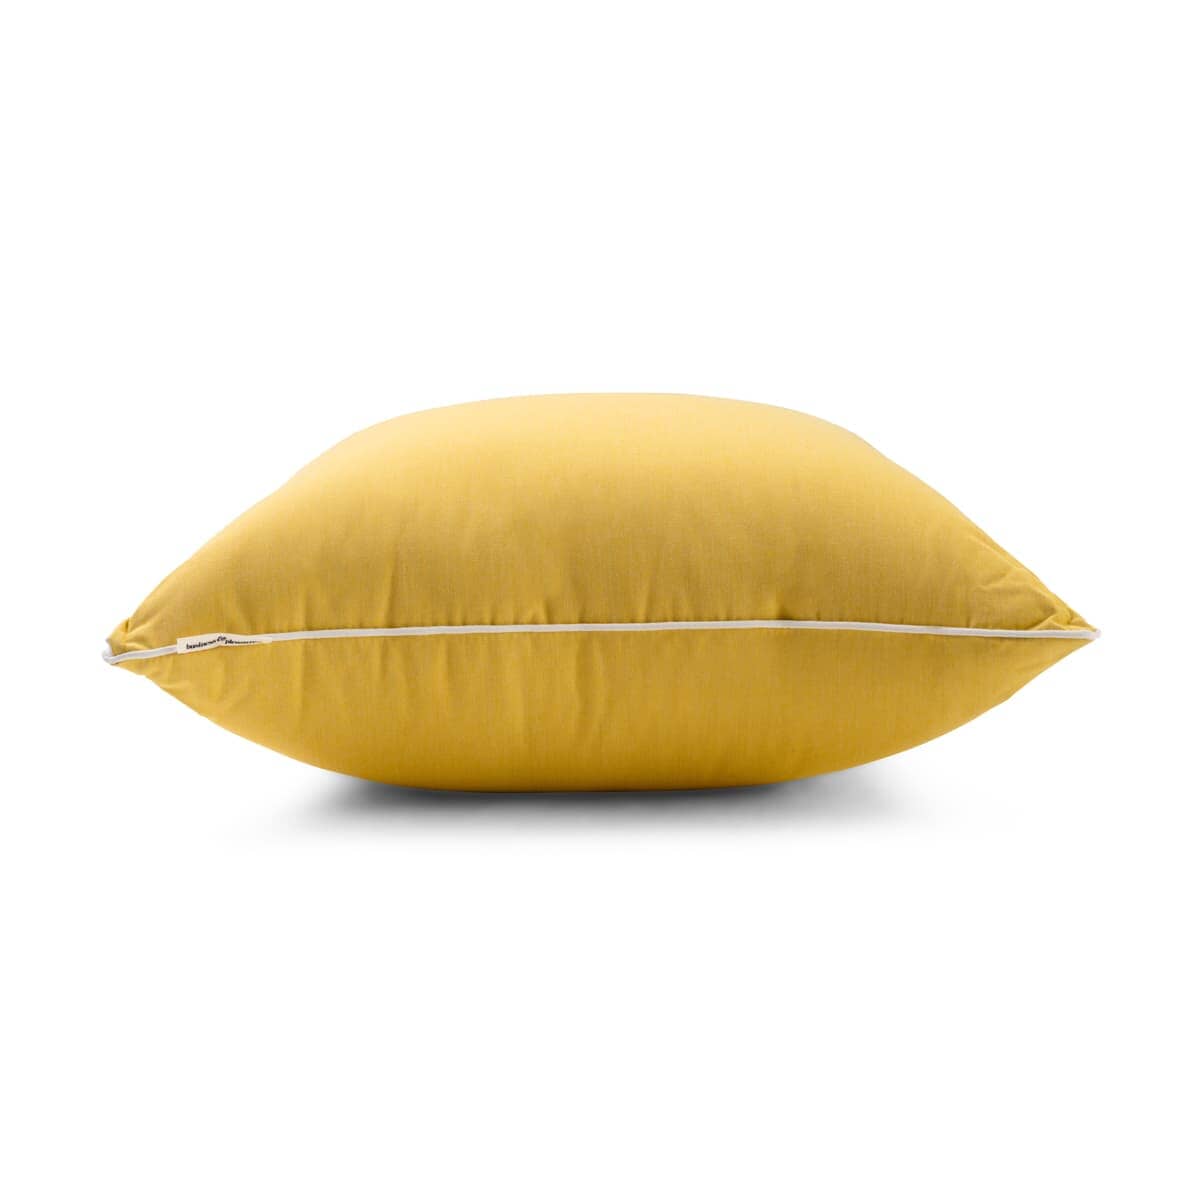 Studio image of riviera mimosa cushion